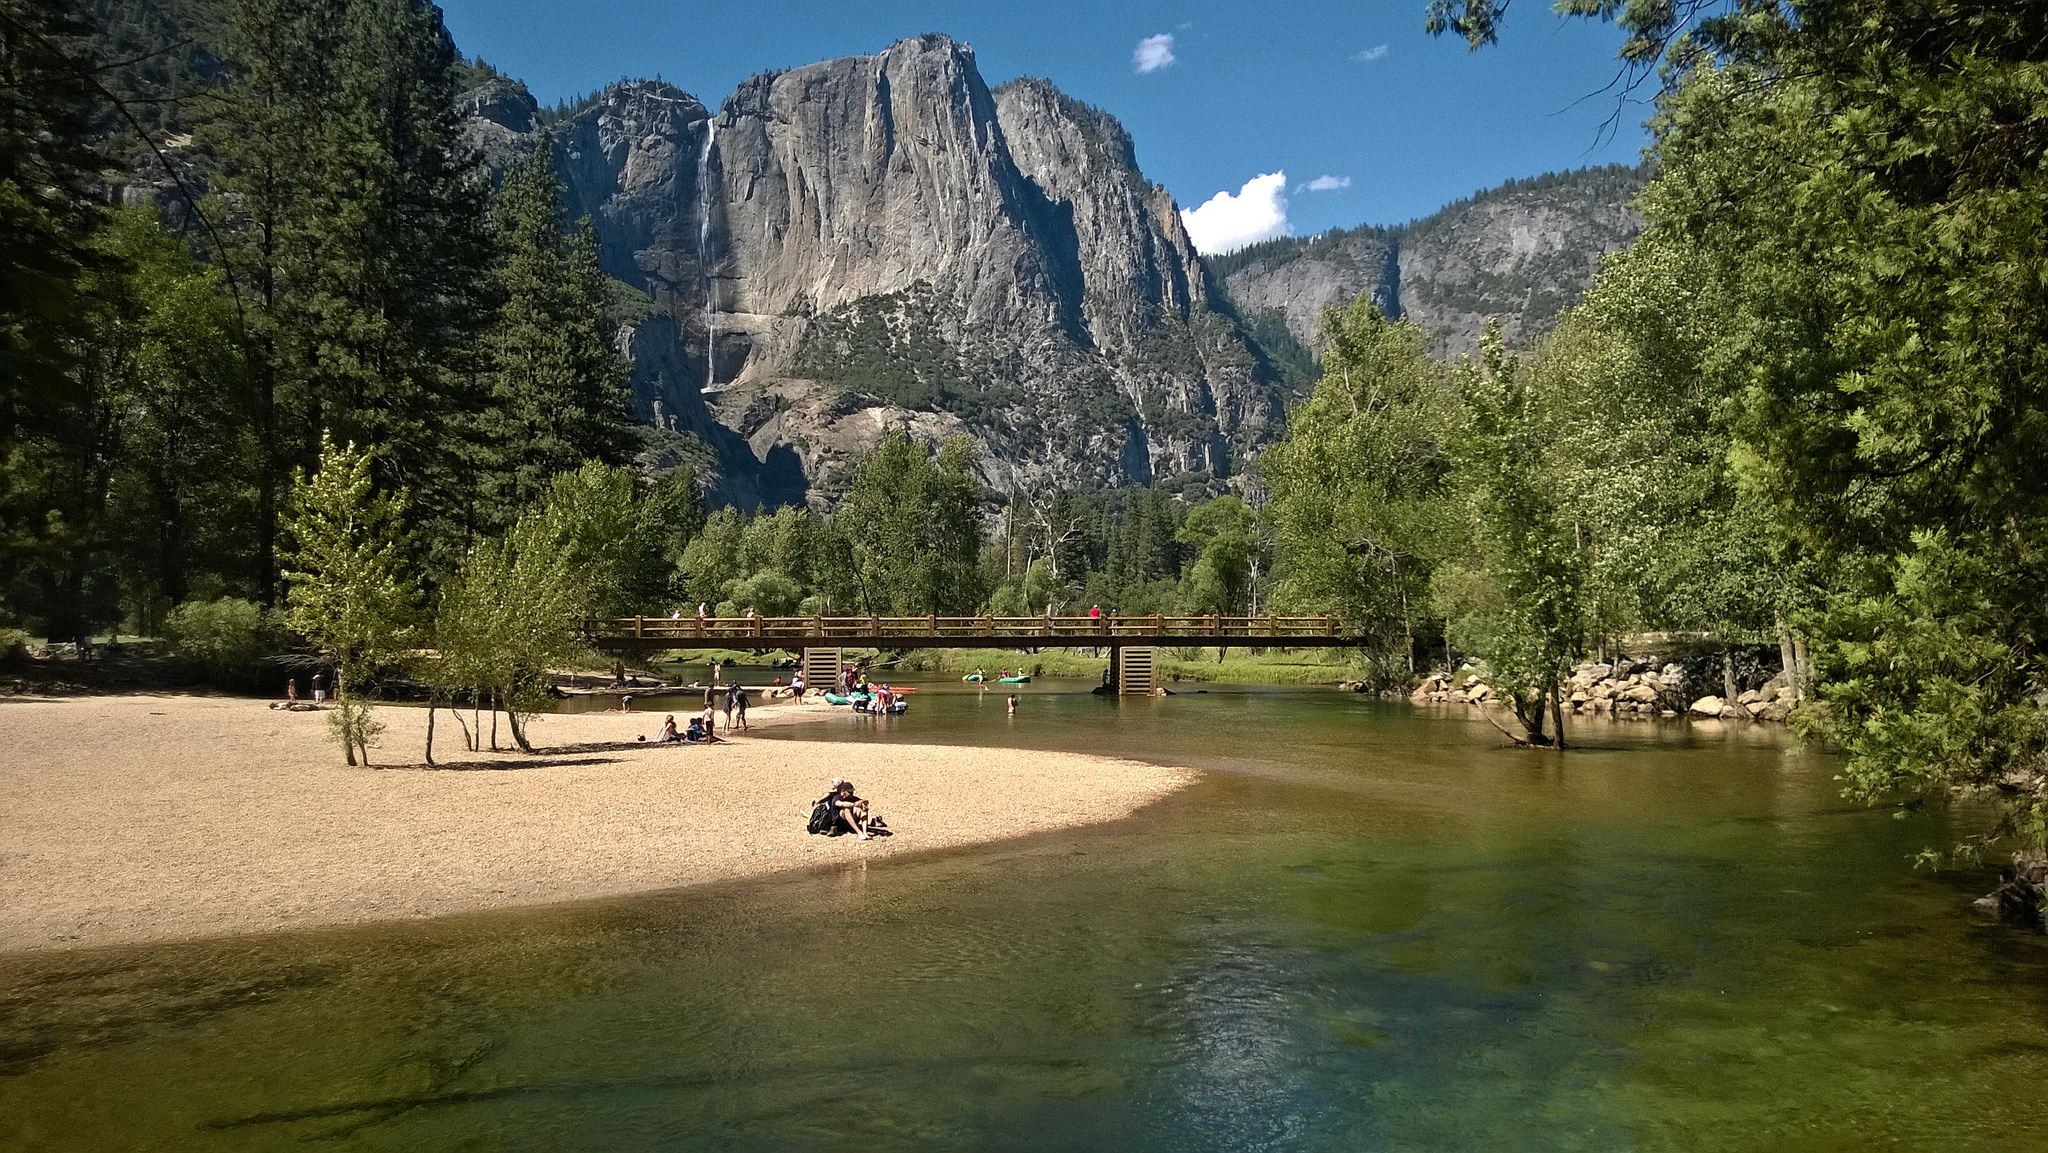 Yosemite National Park Travel Guide